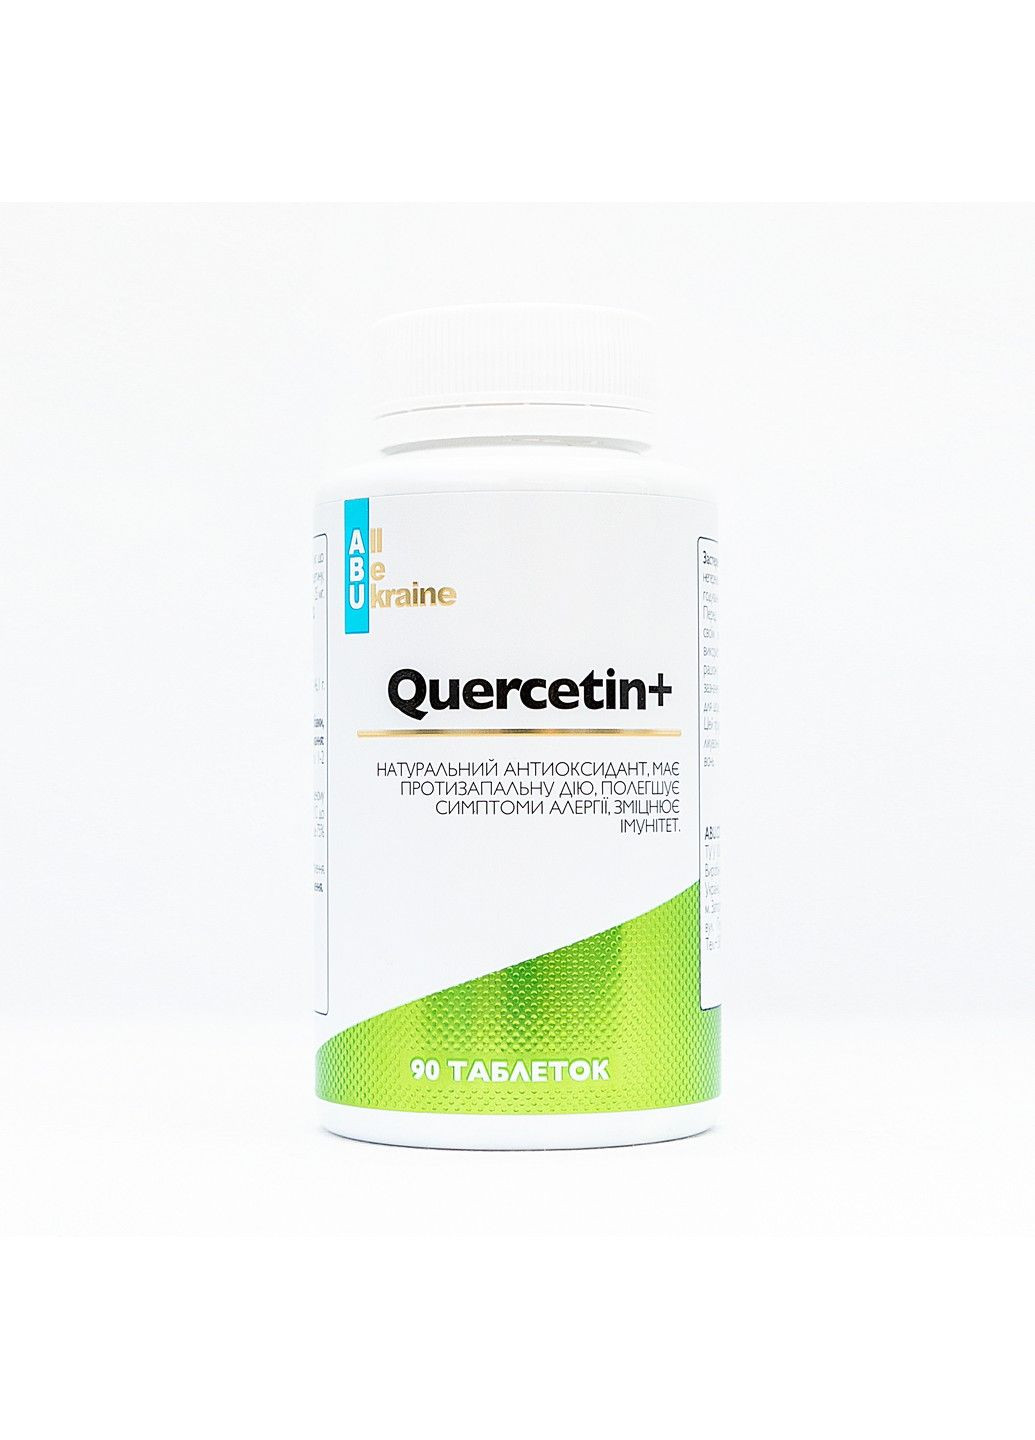 Кверцетин Quercetin+, 90 таблеток ABU (All Be Ukraine) (292785625)